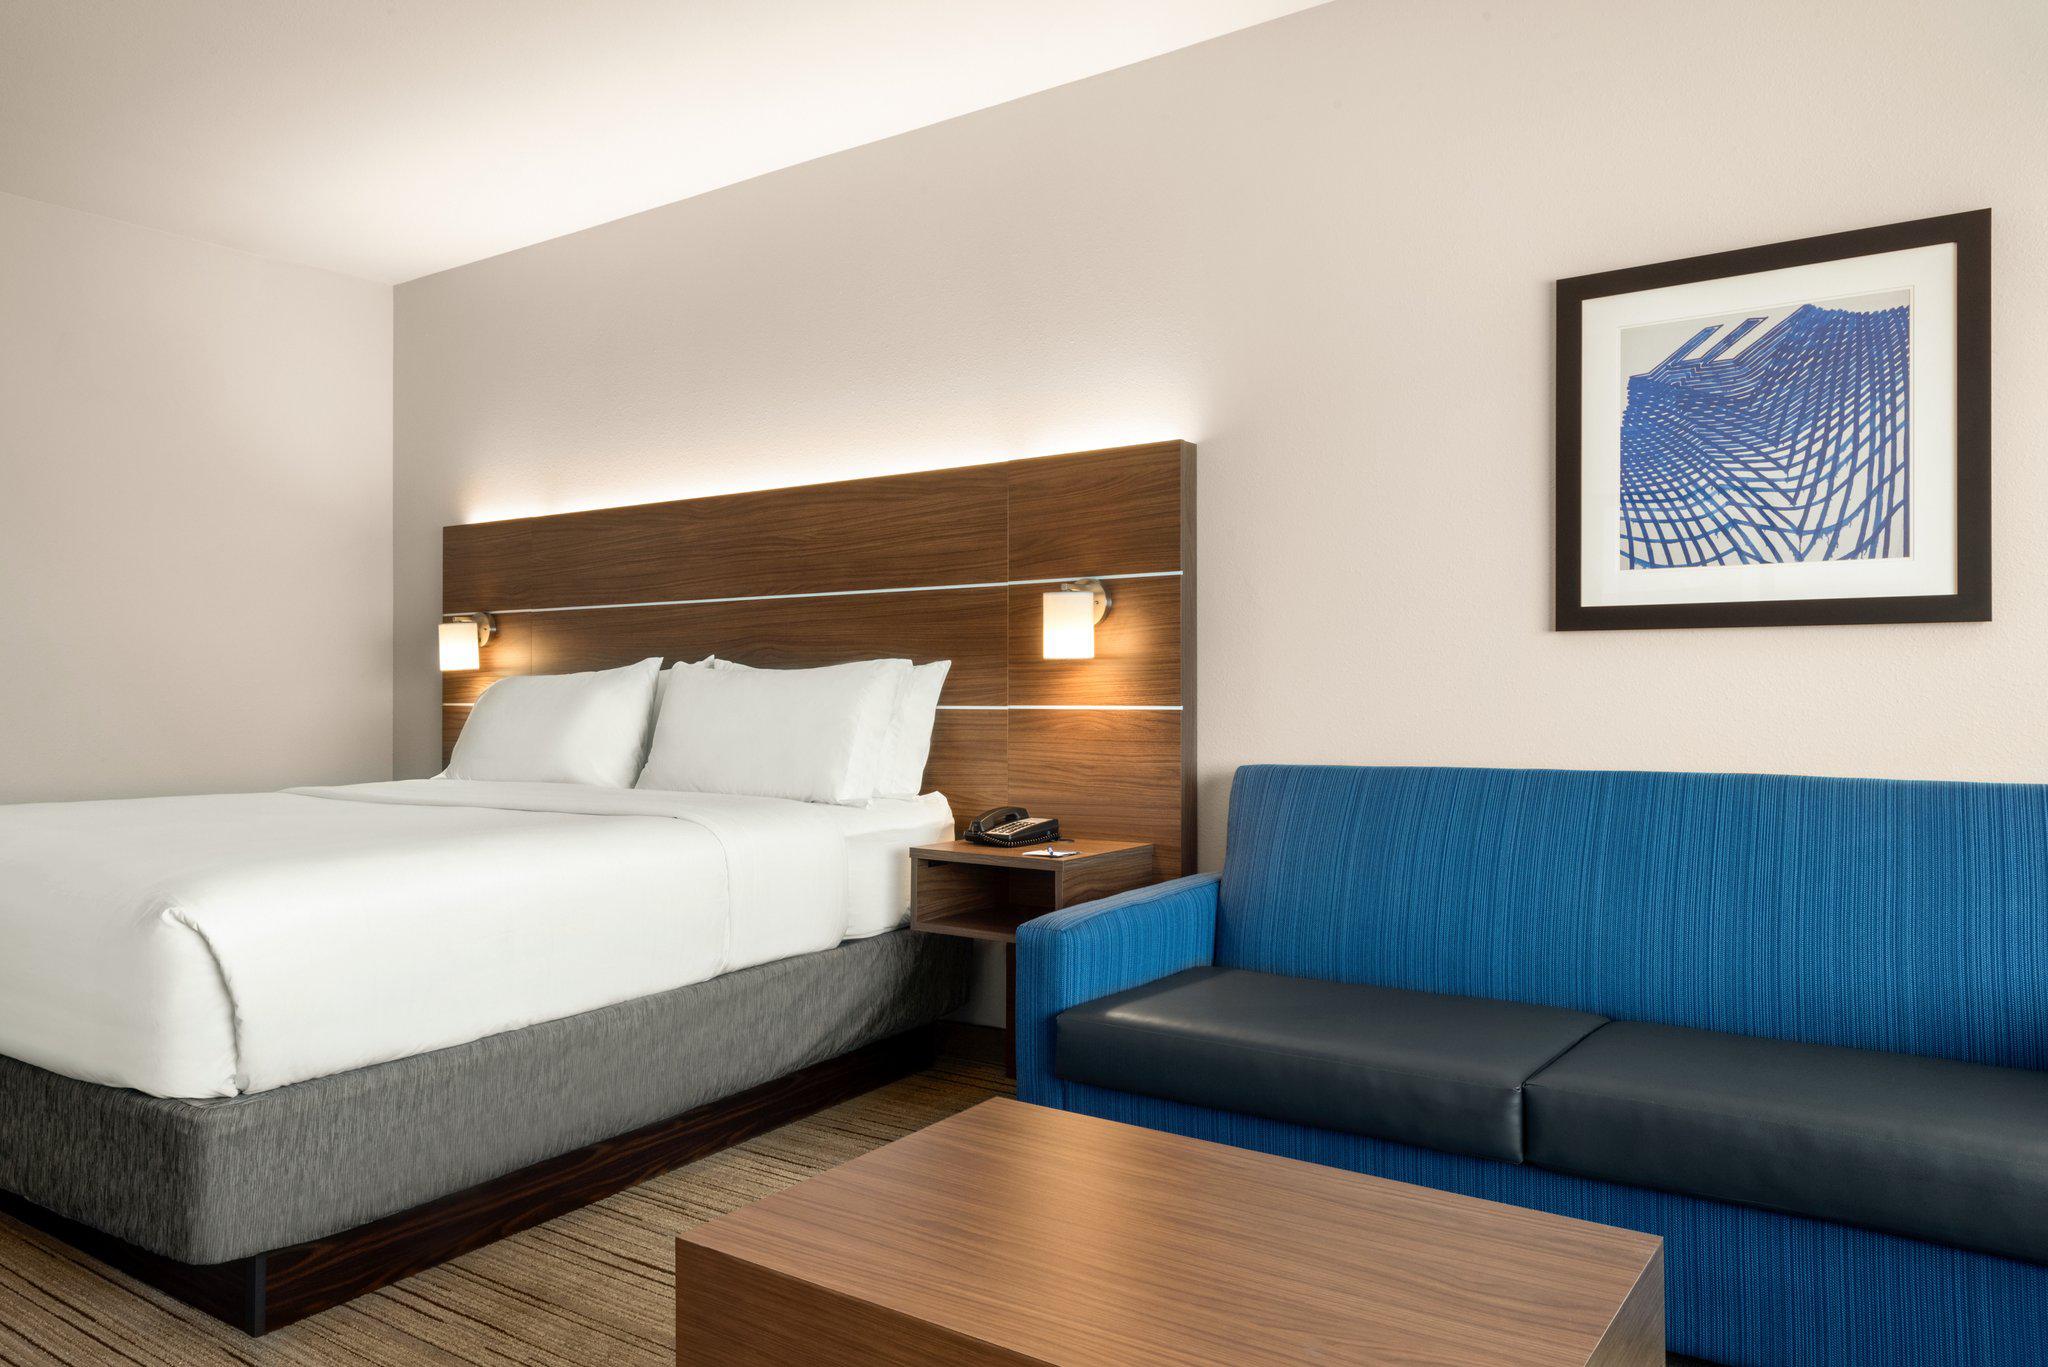 Holiday Inn Express & Suites West Des Moines - Jordan West, an IHG Hotel West Des Moines (515)223-4050